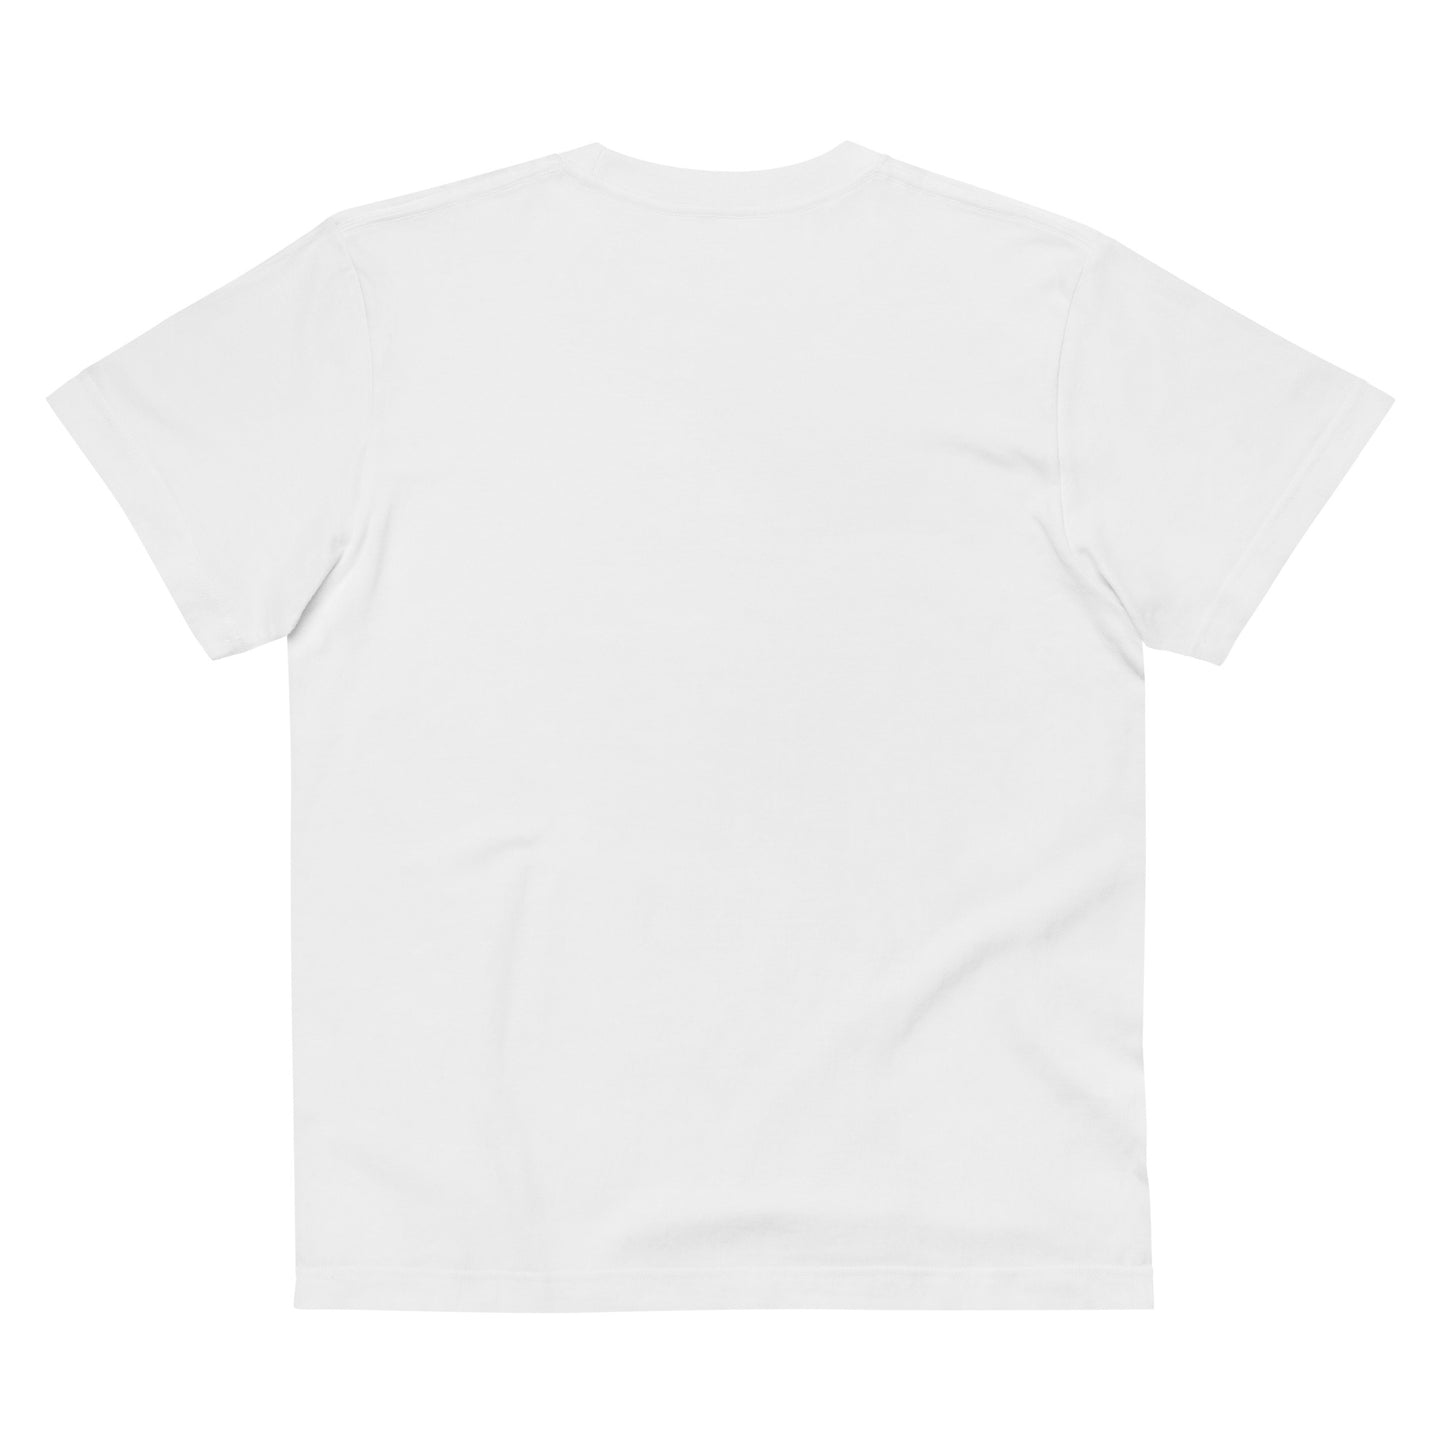 P020 - T-shirt/Traditional (Pony : White/Black)